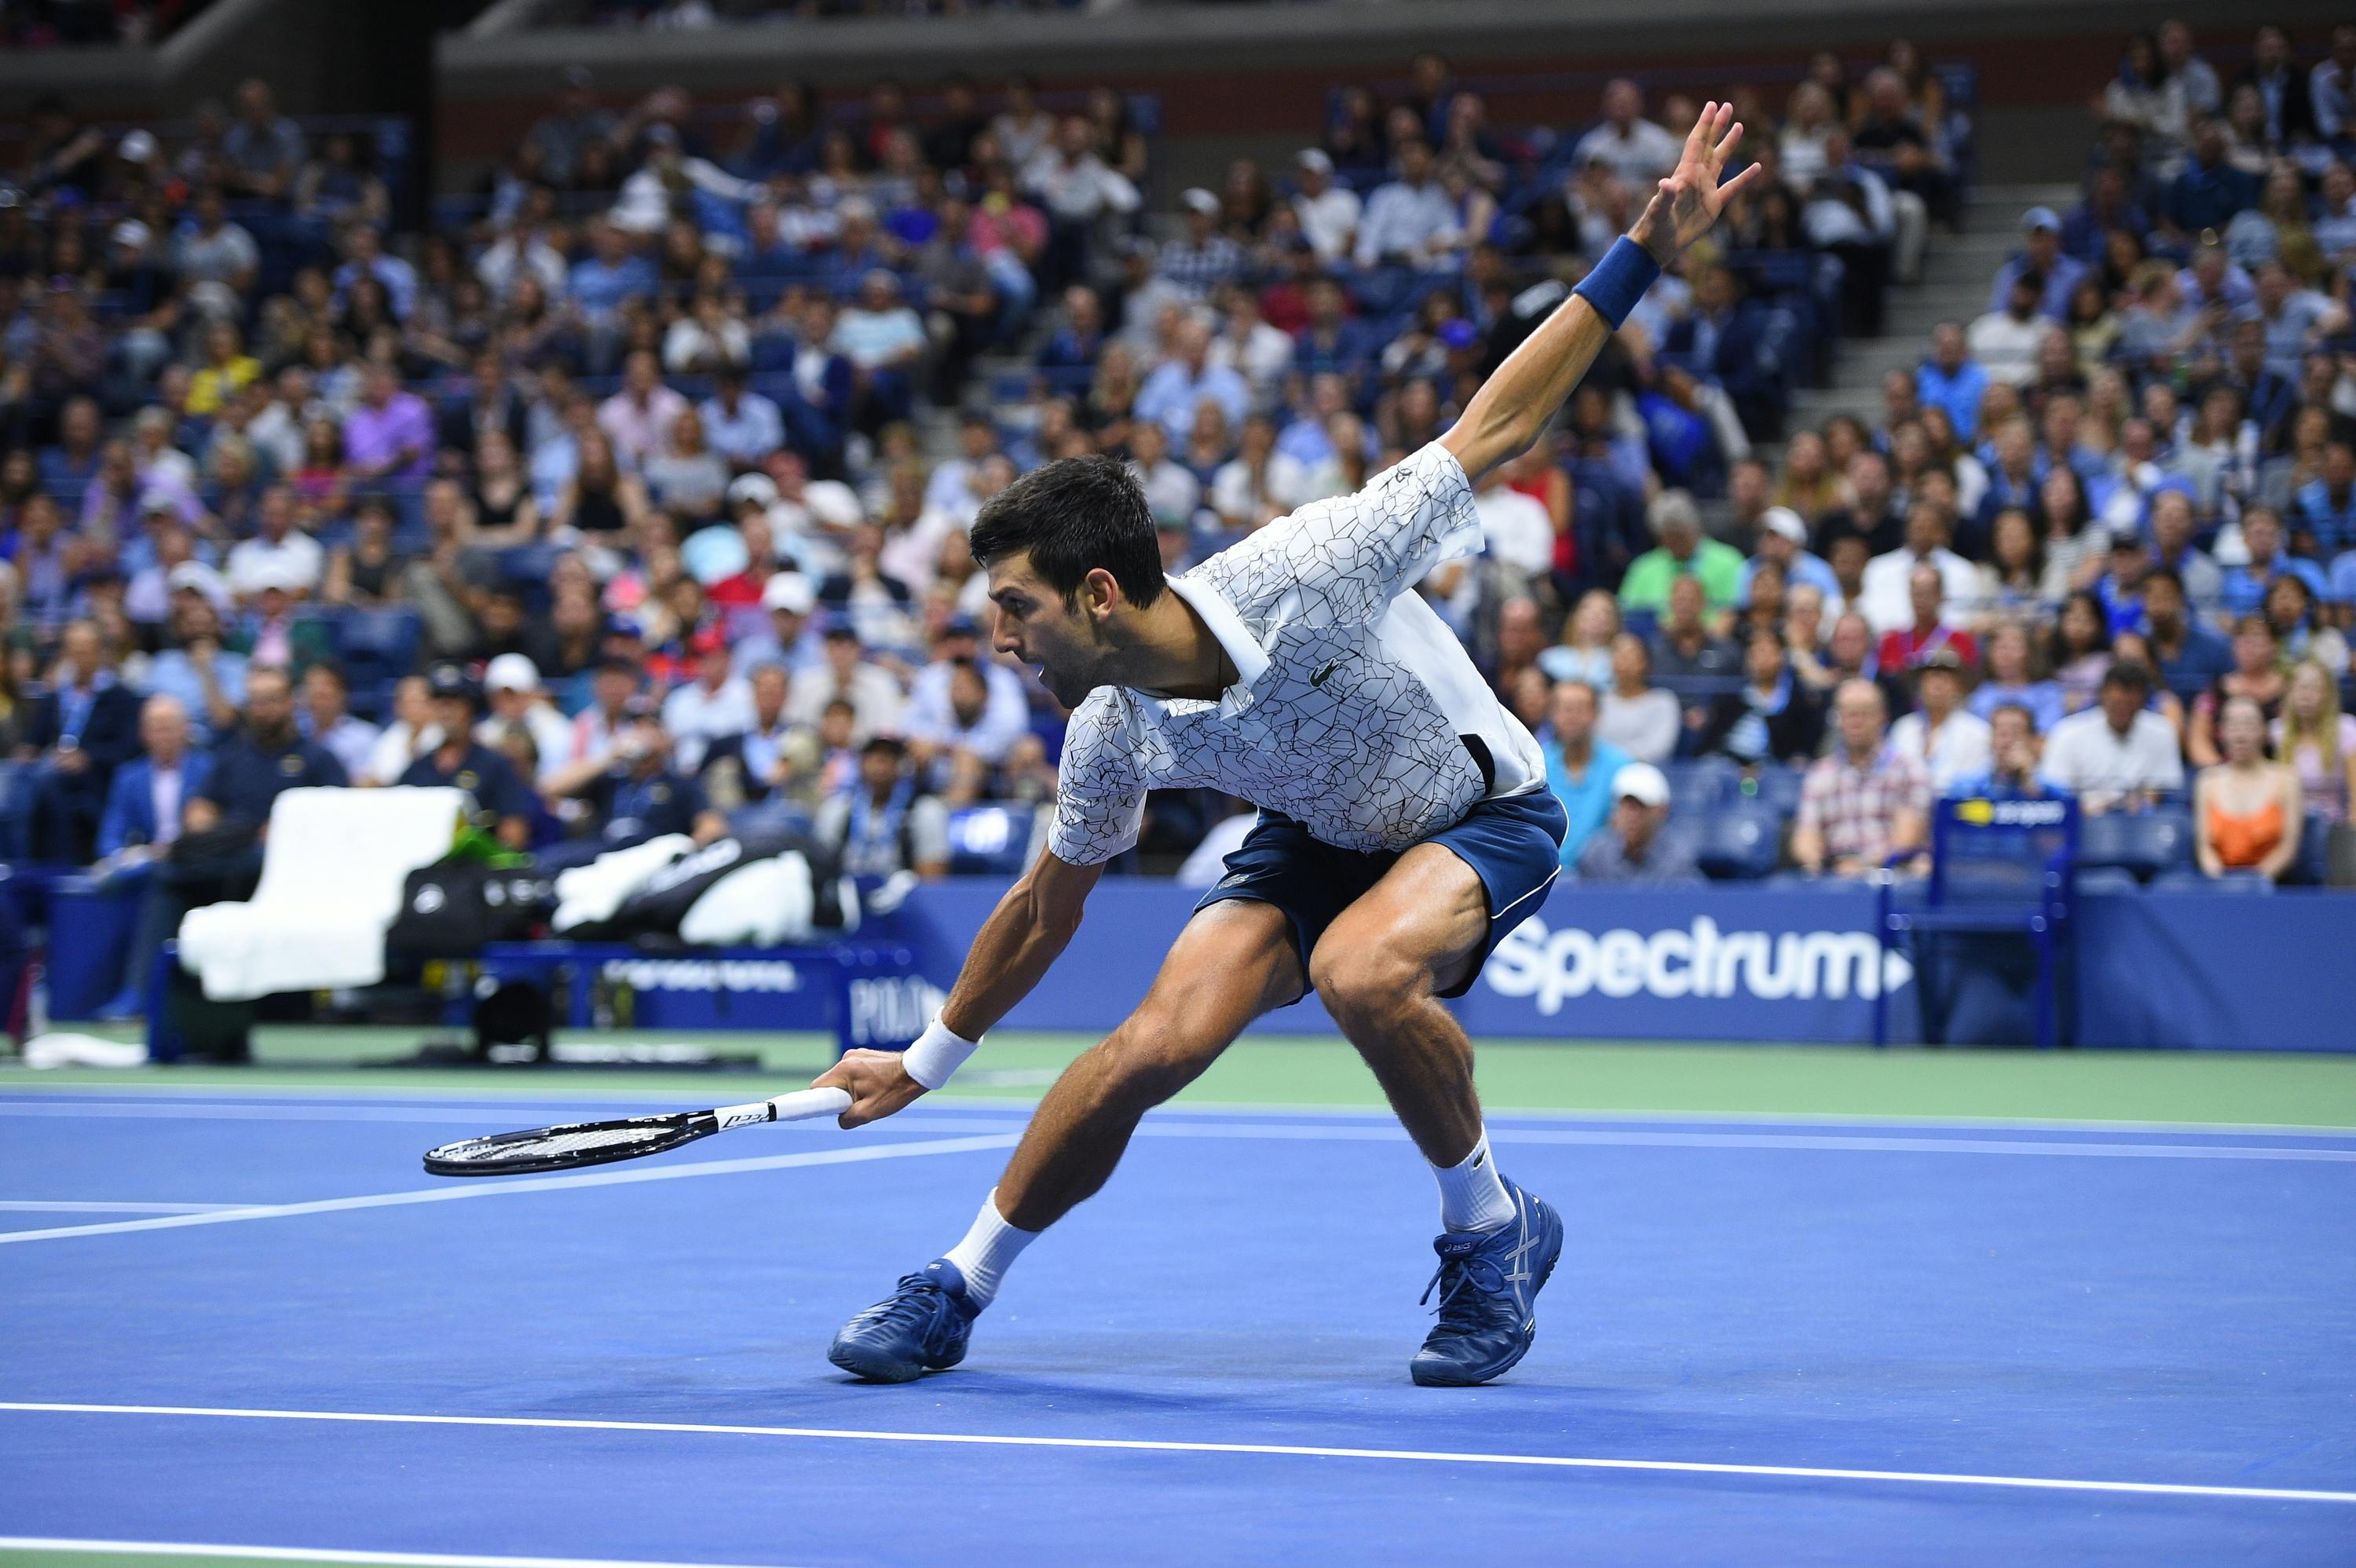 Beautiful defense from Novak Djokovic during the 2018 US Open